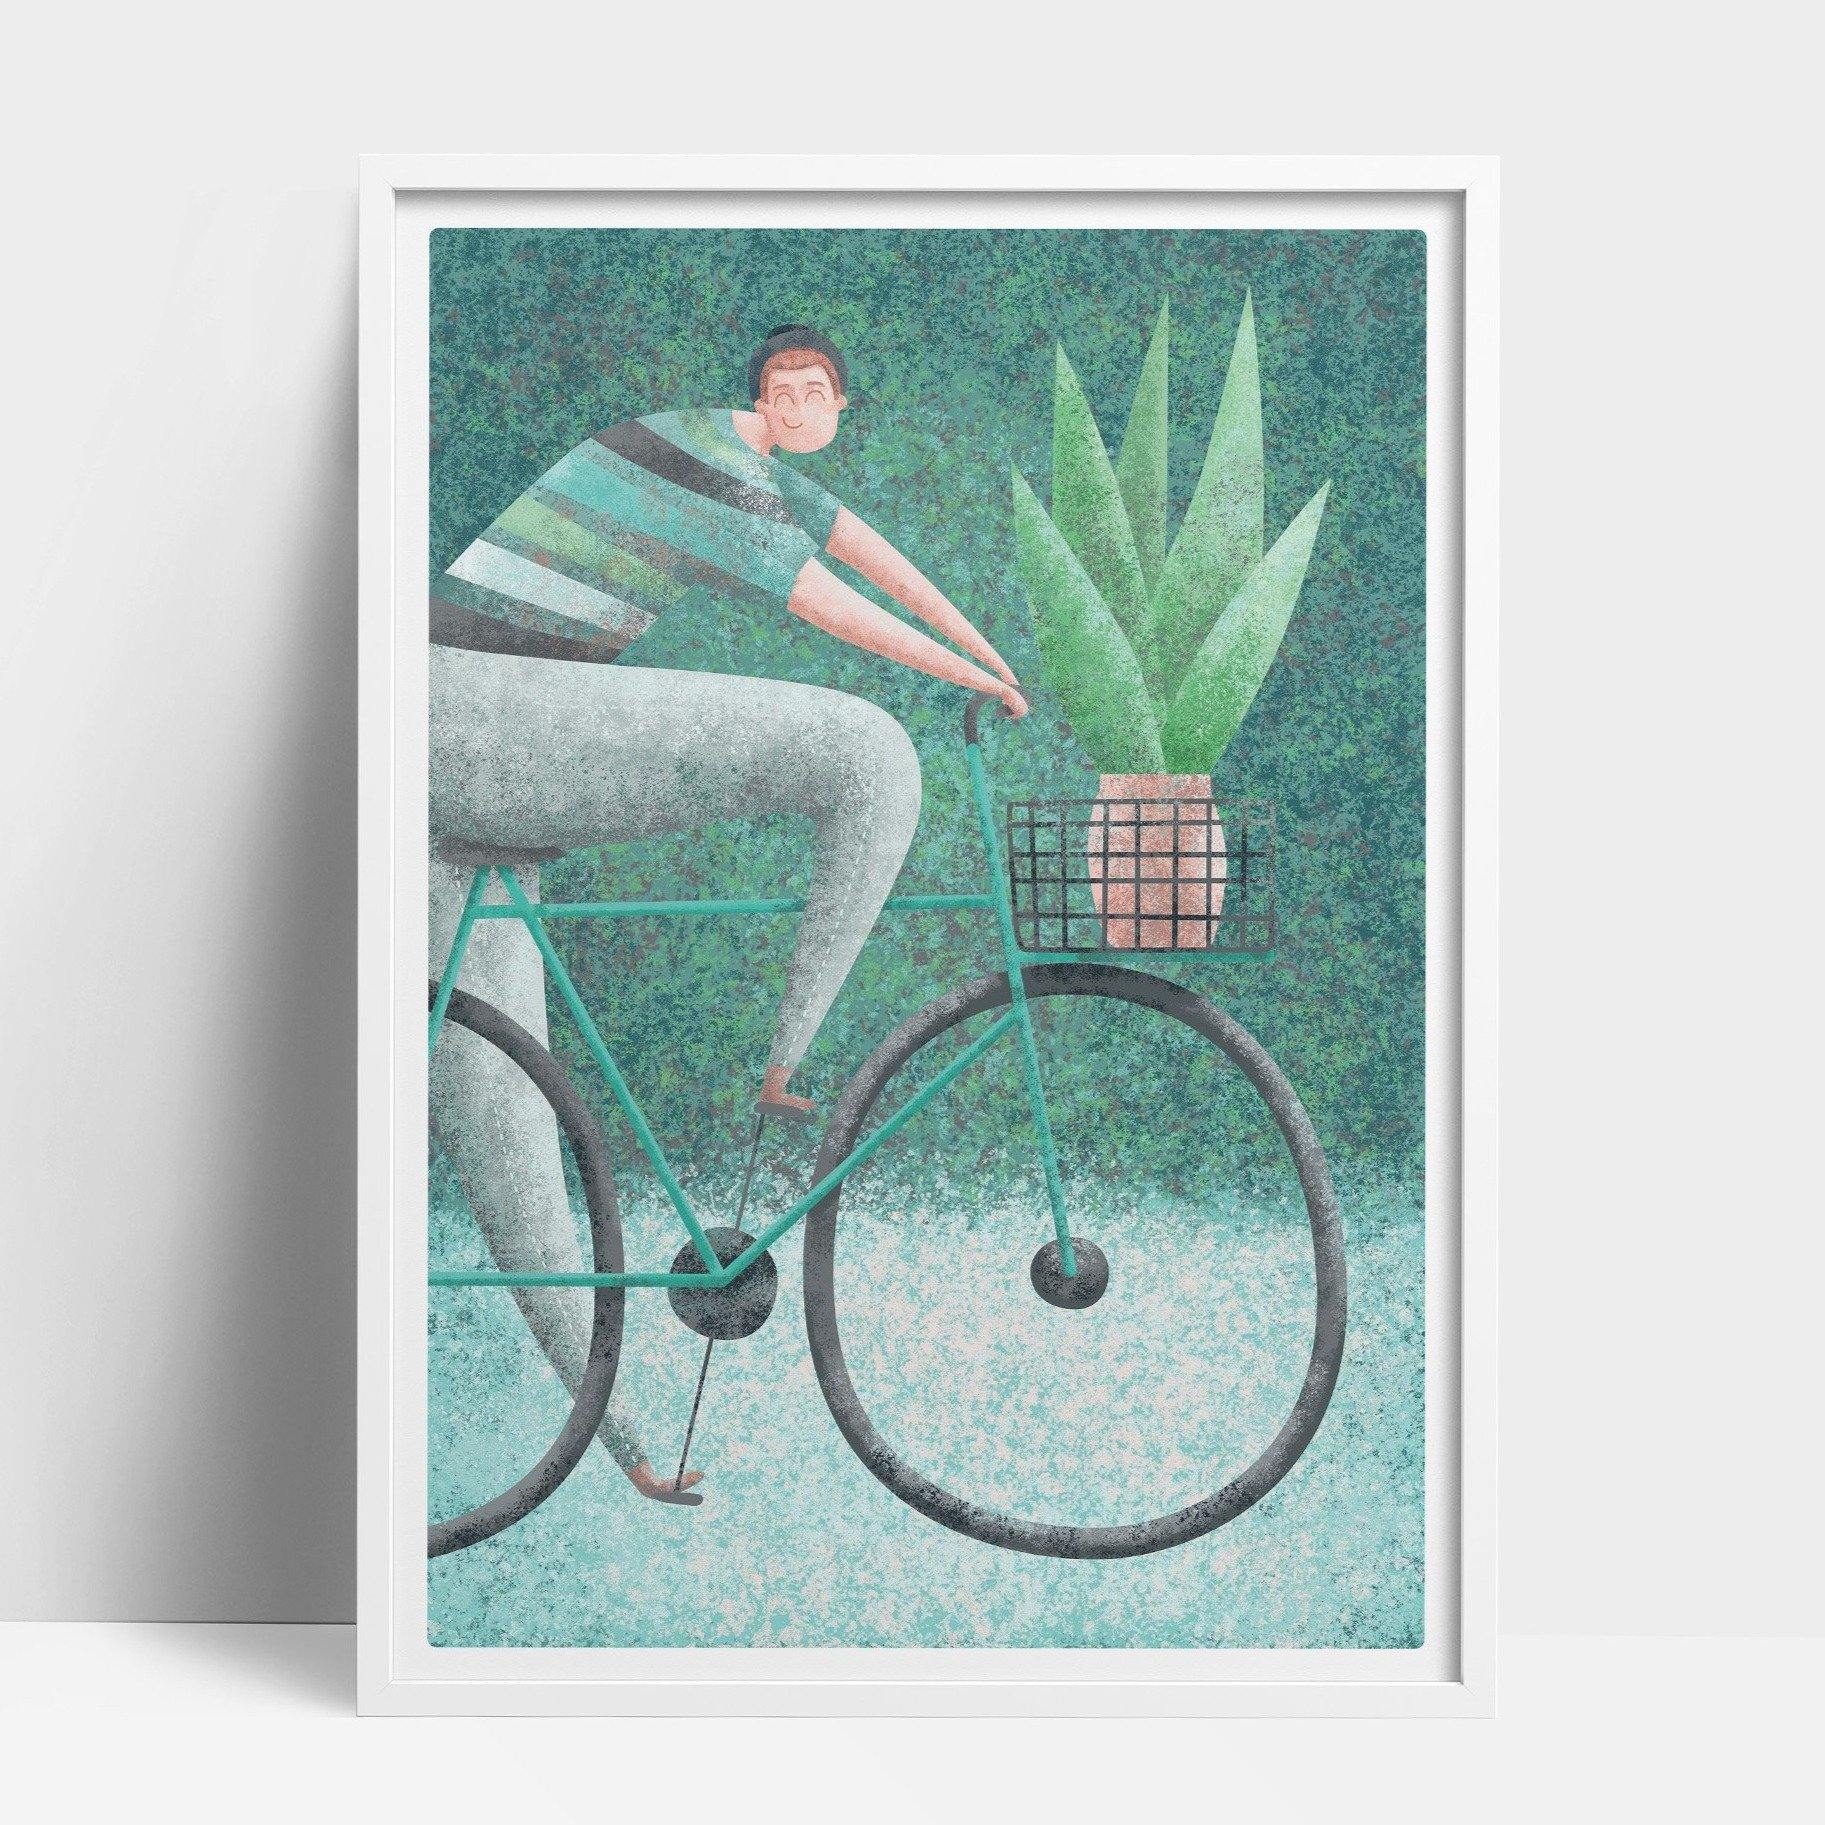 Buy online Premium Quality Plant Guy On Bicycle Art Print - Urban Jungle Life